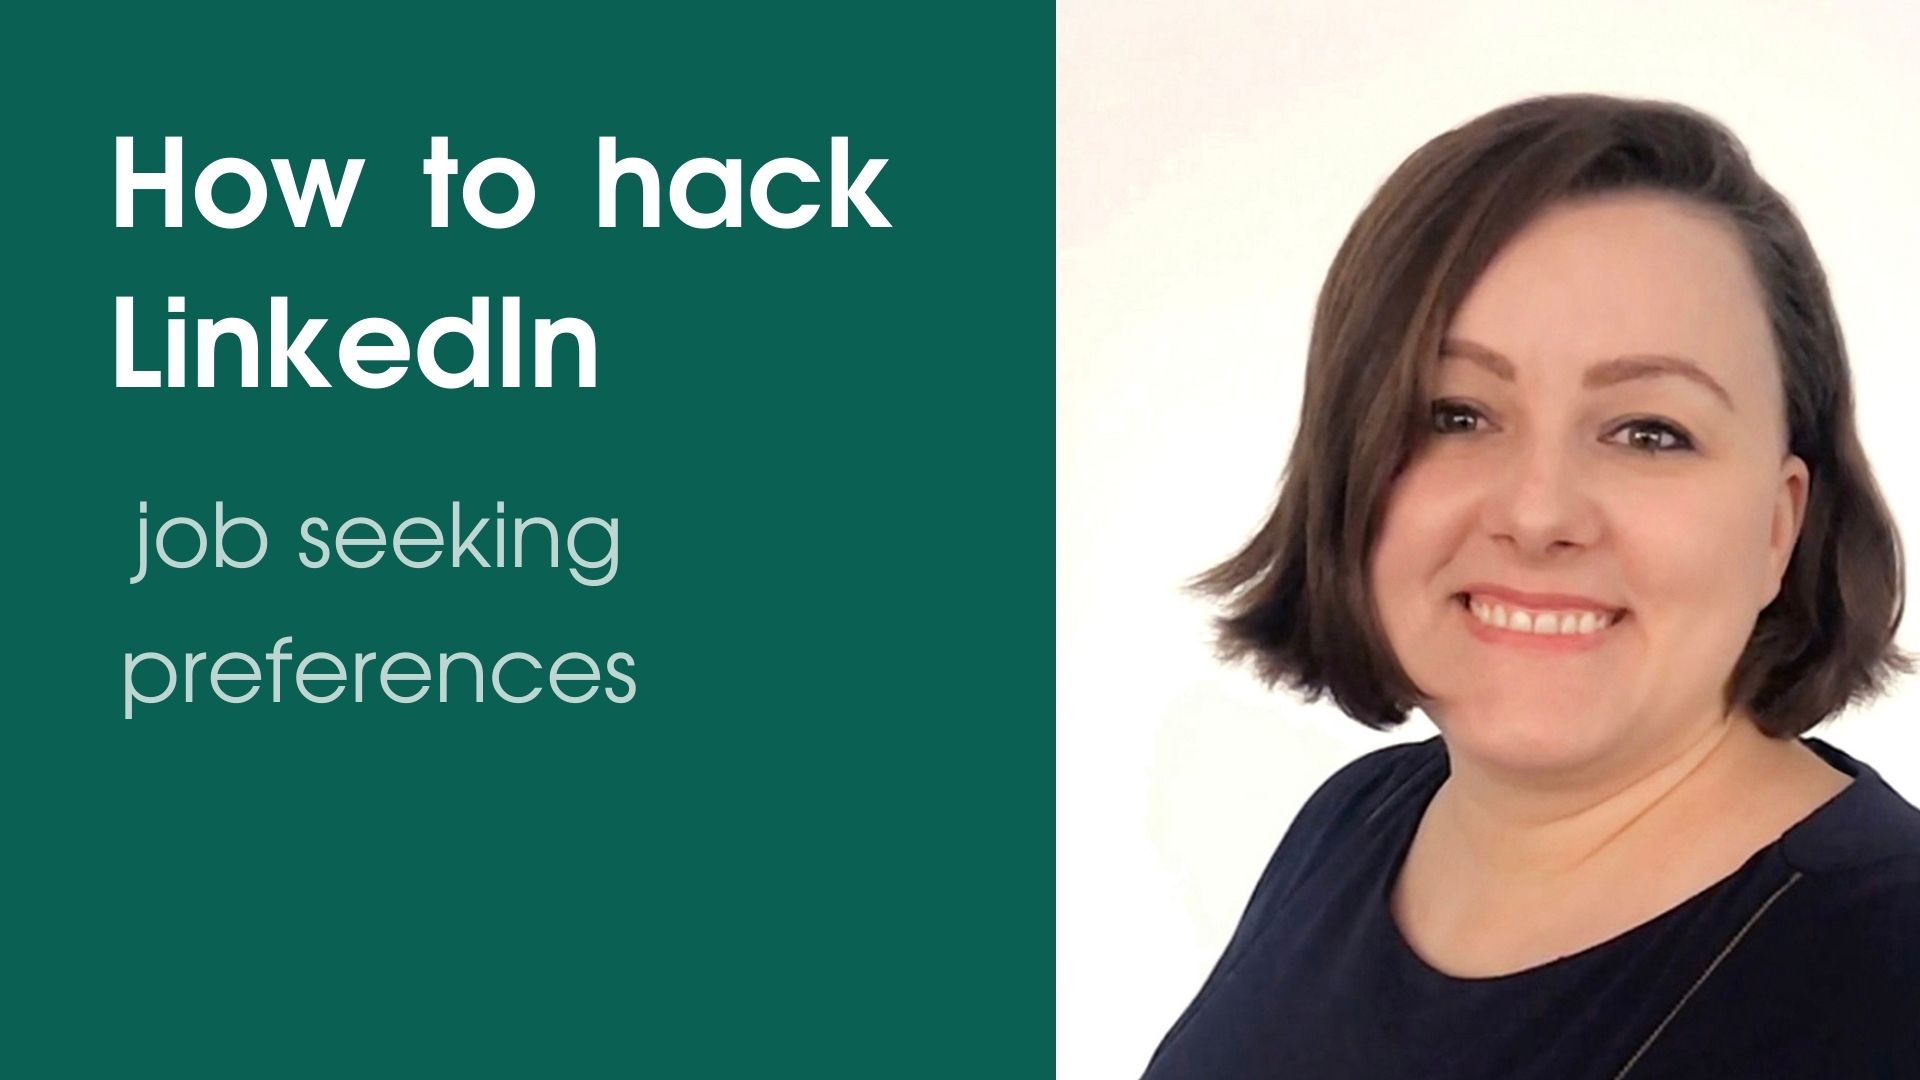 How to hack LinkedIn - job seeking preferences